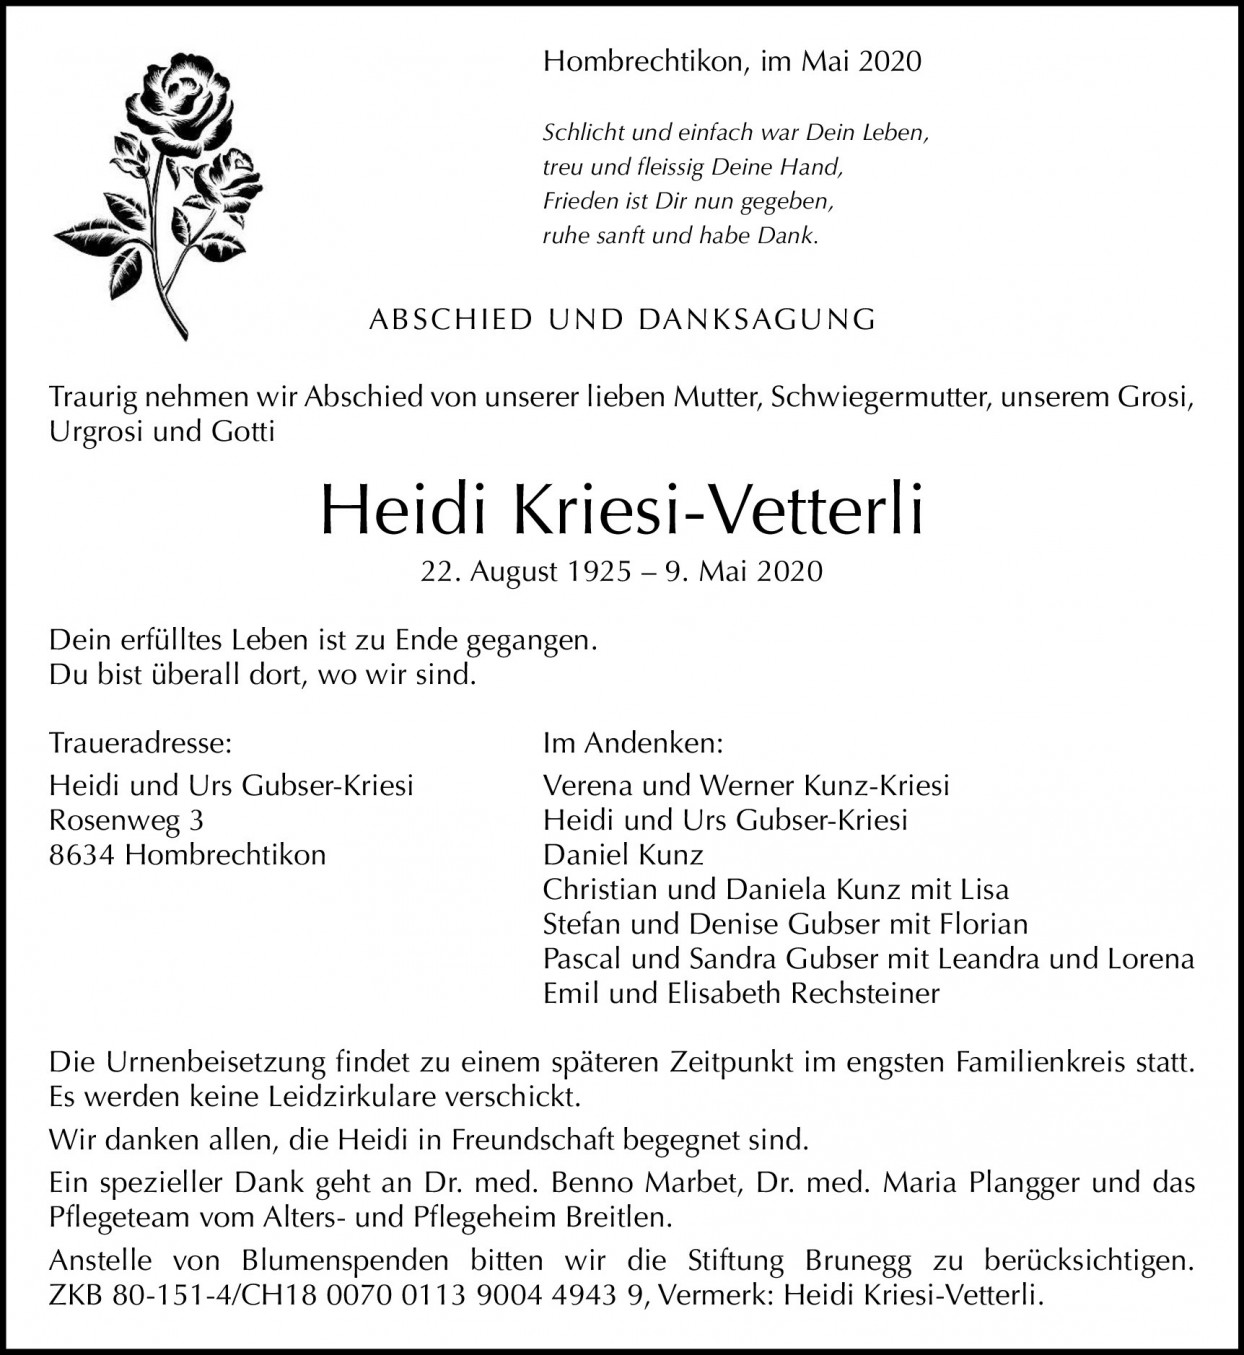 Heidi Kriesi-Vetterli